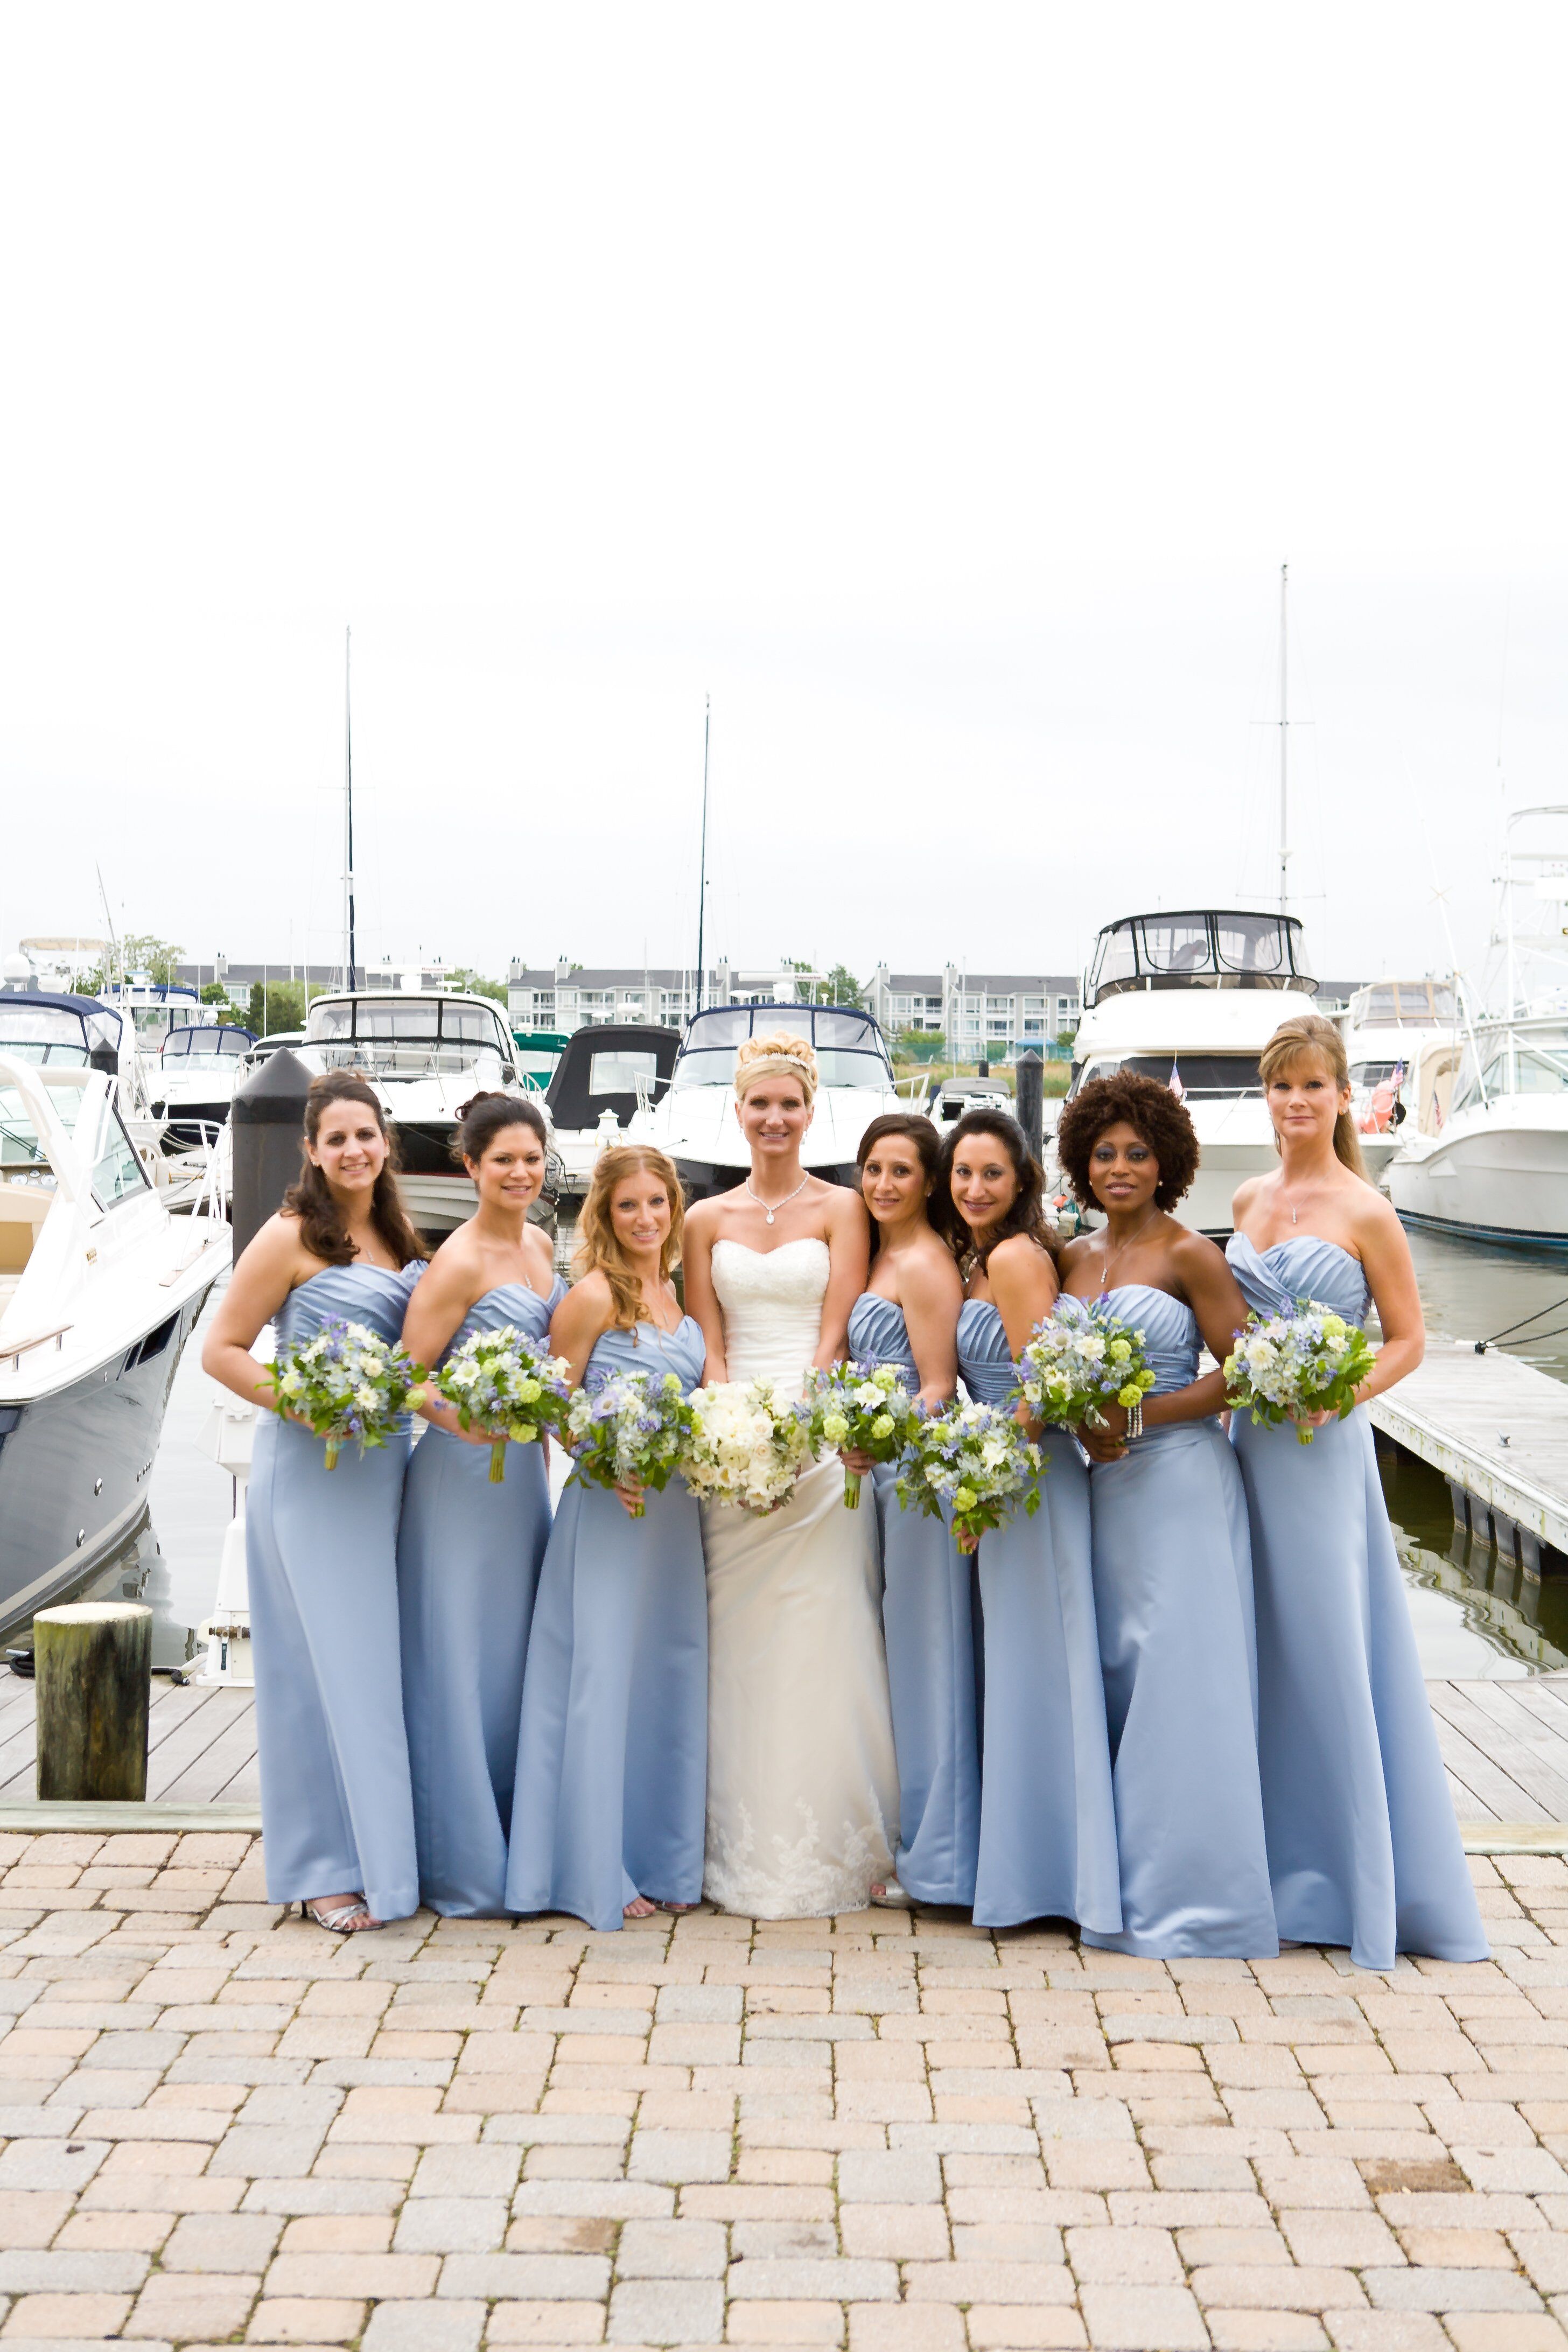 Cornflower Blue Bridesmaid Dresses